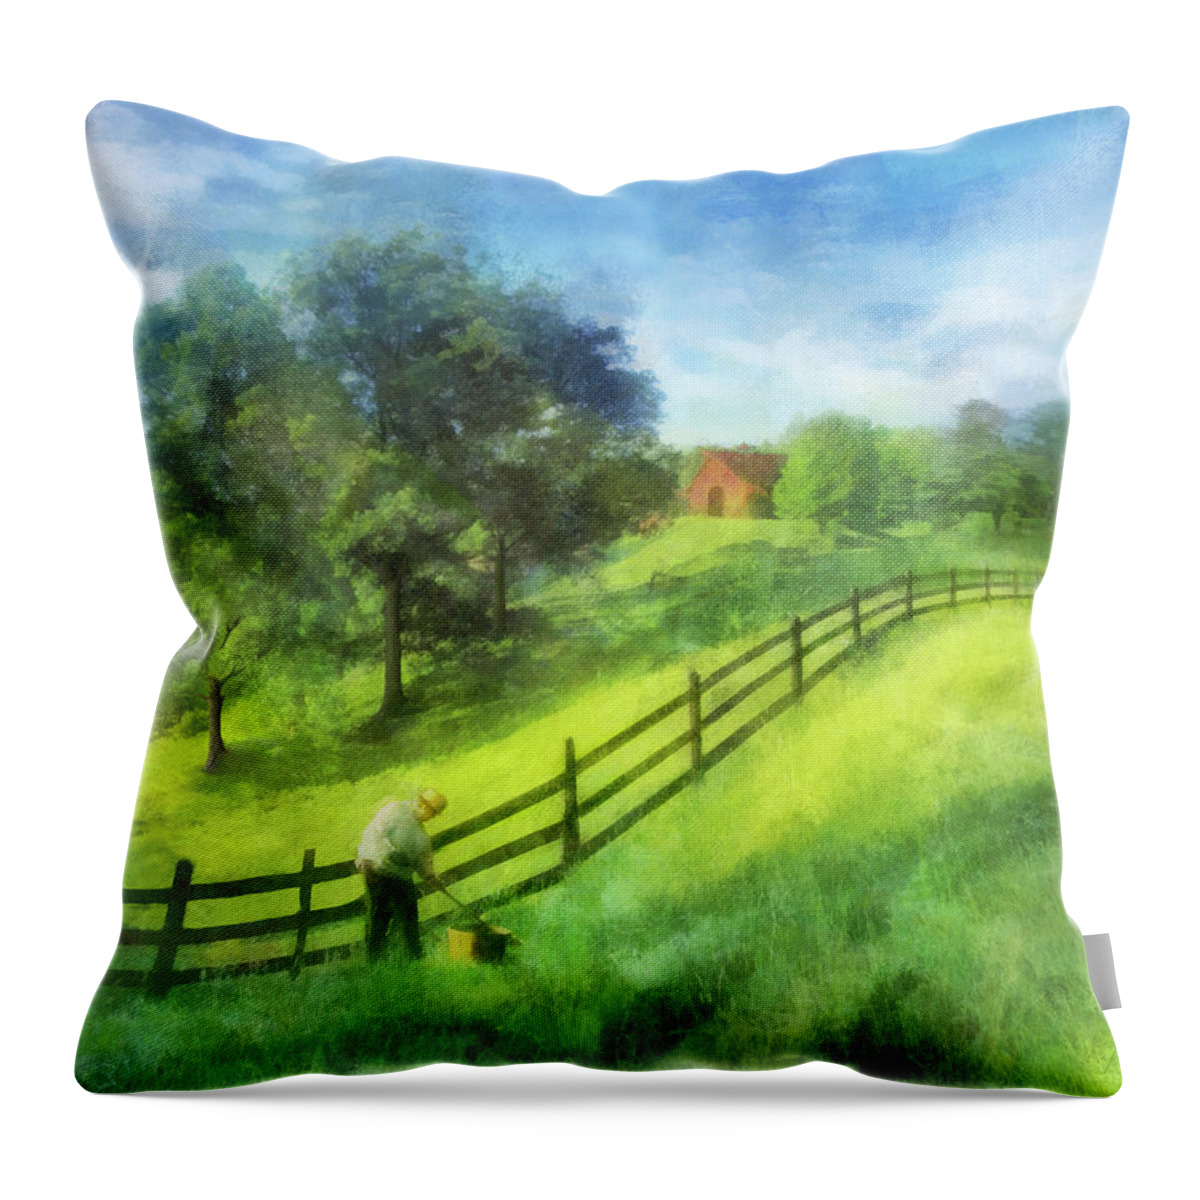 Farm Throw Pillow featuring the digital art Farm on the Hill by Frances Miller